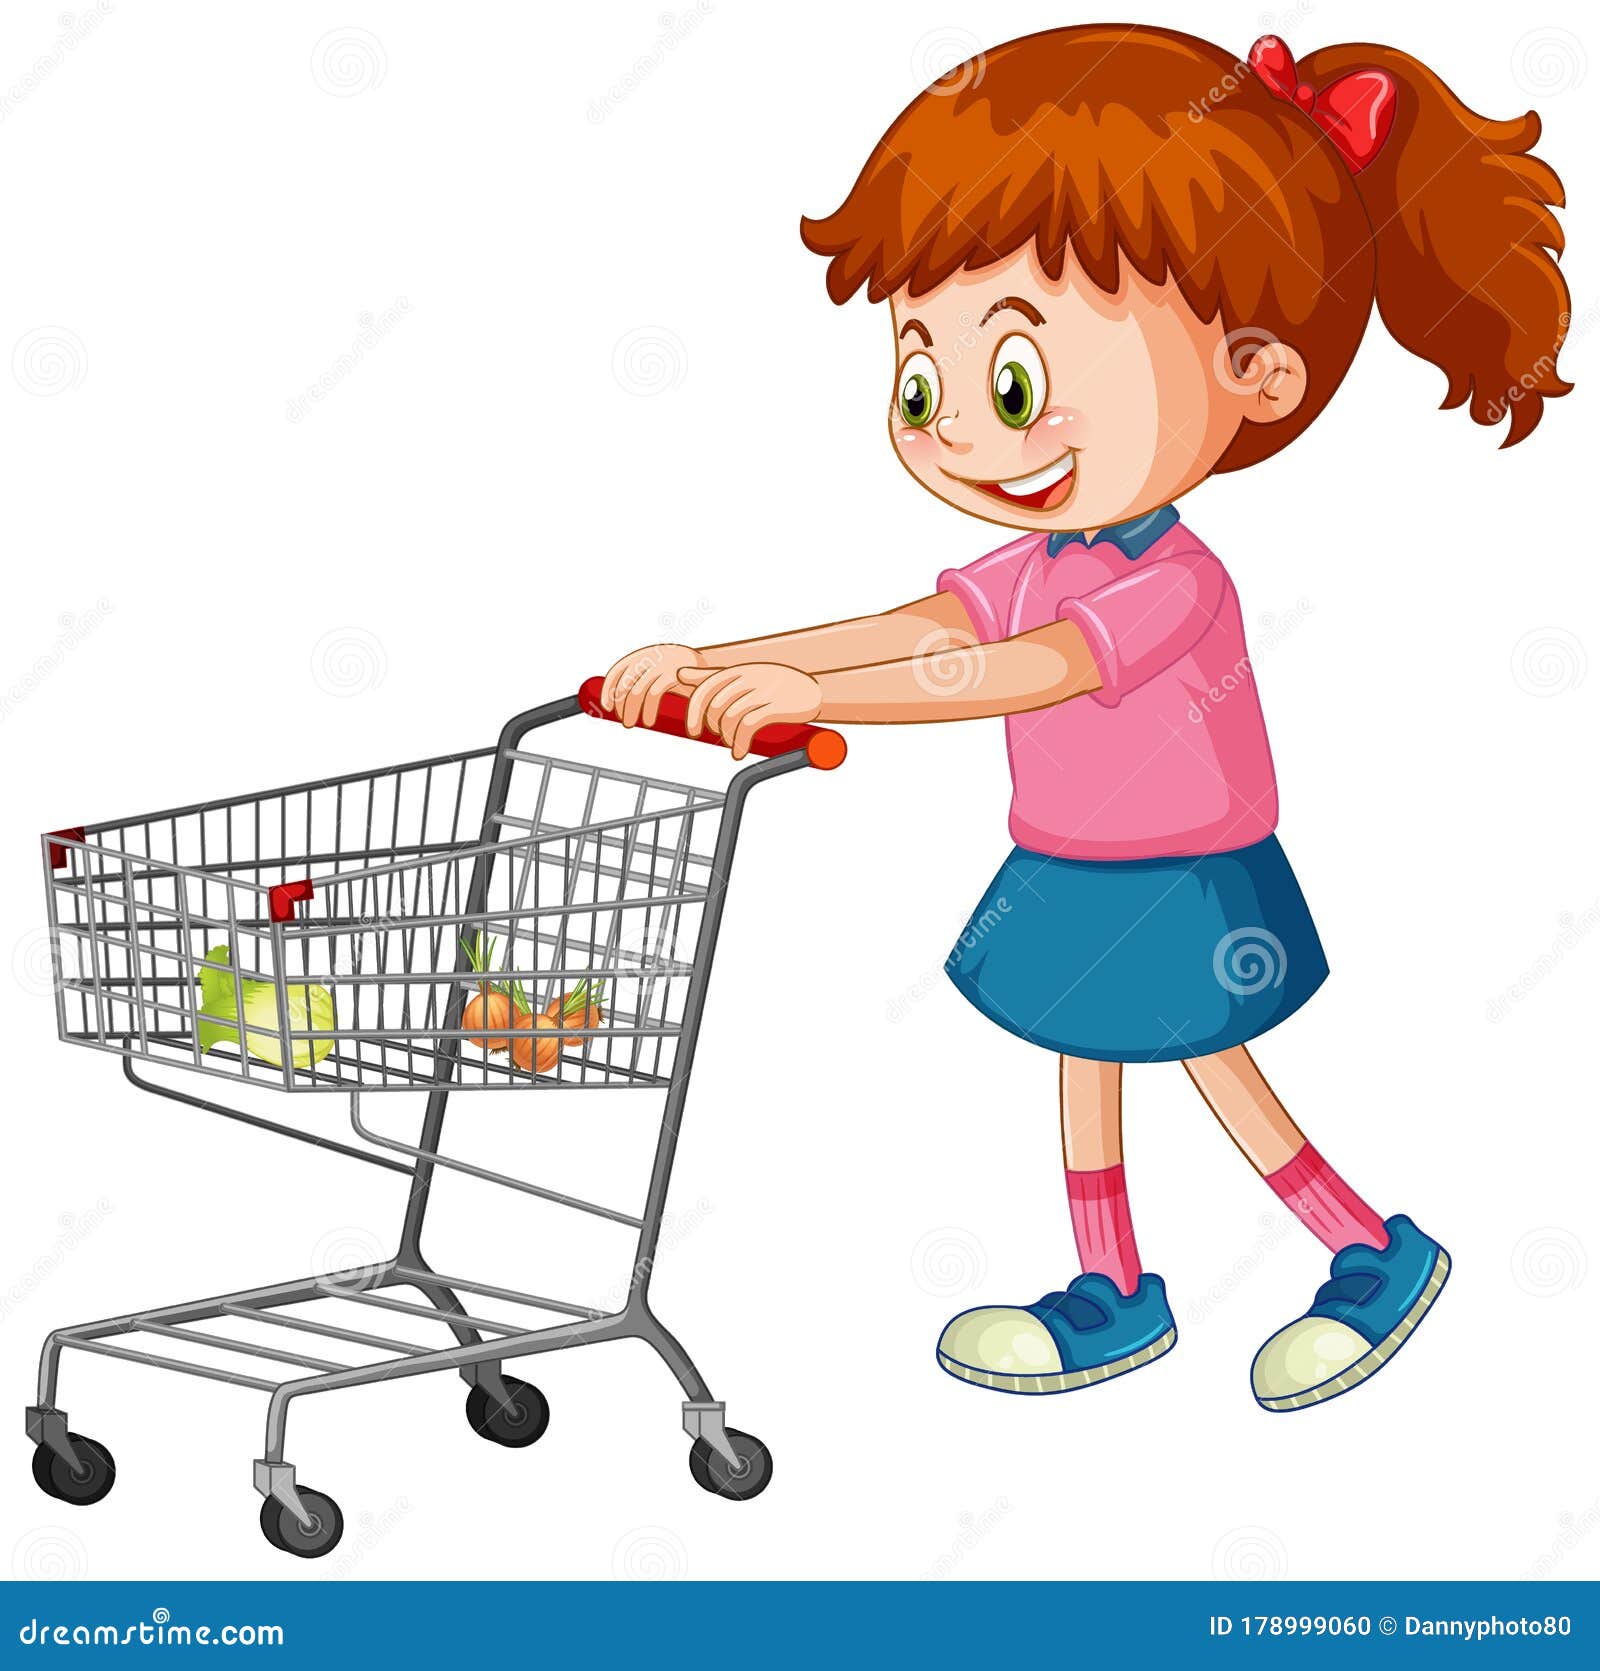 Supermarket Cart Cartoon : Supermarket Aisle With Shopping Cart Stock ...